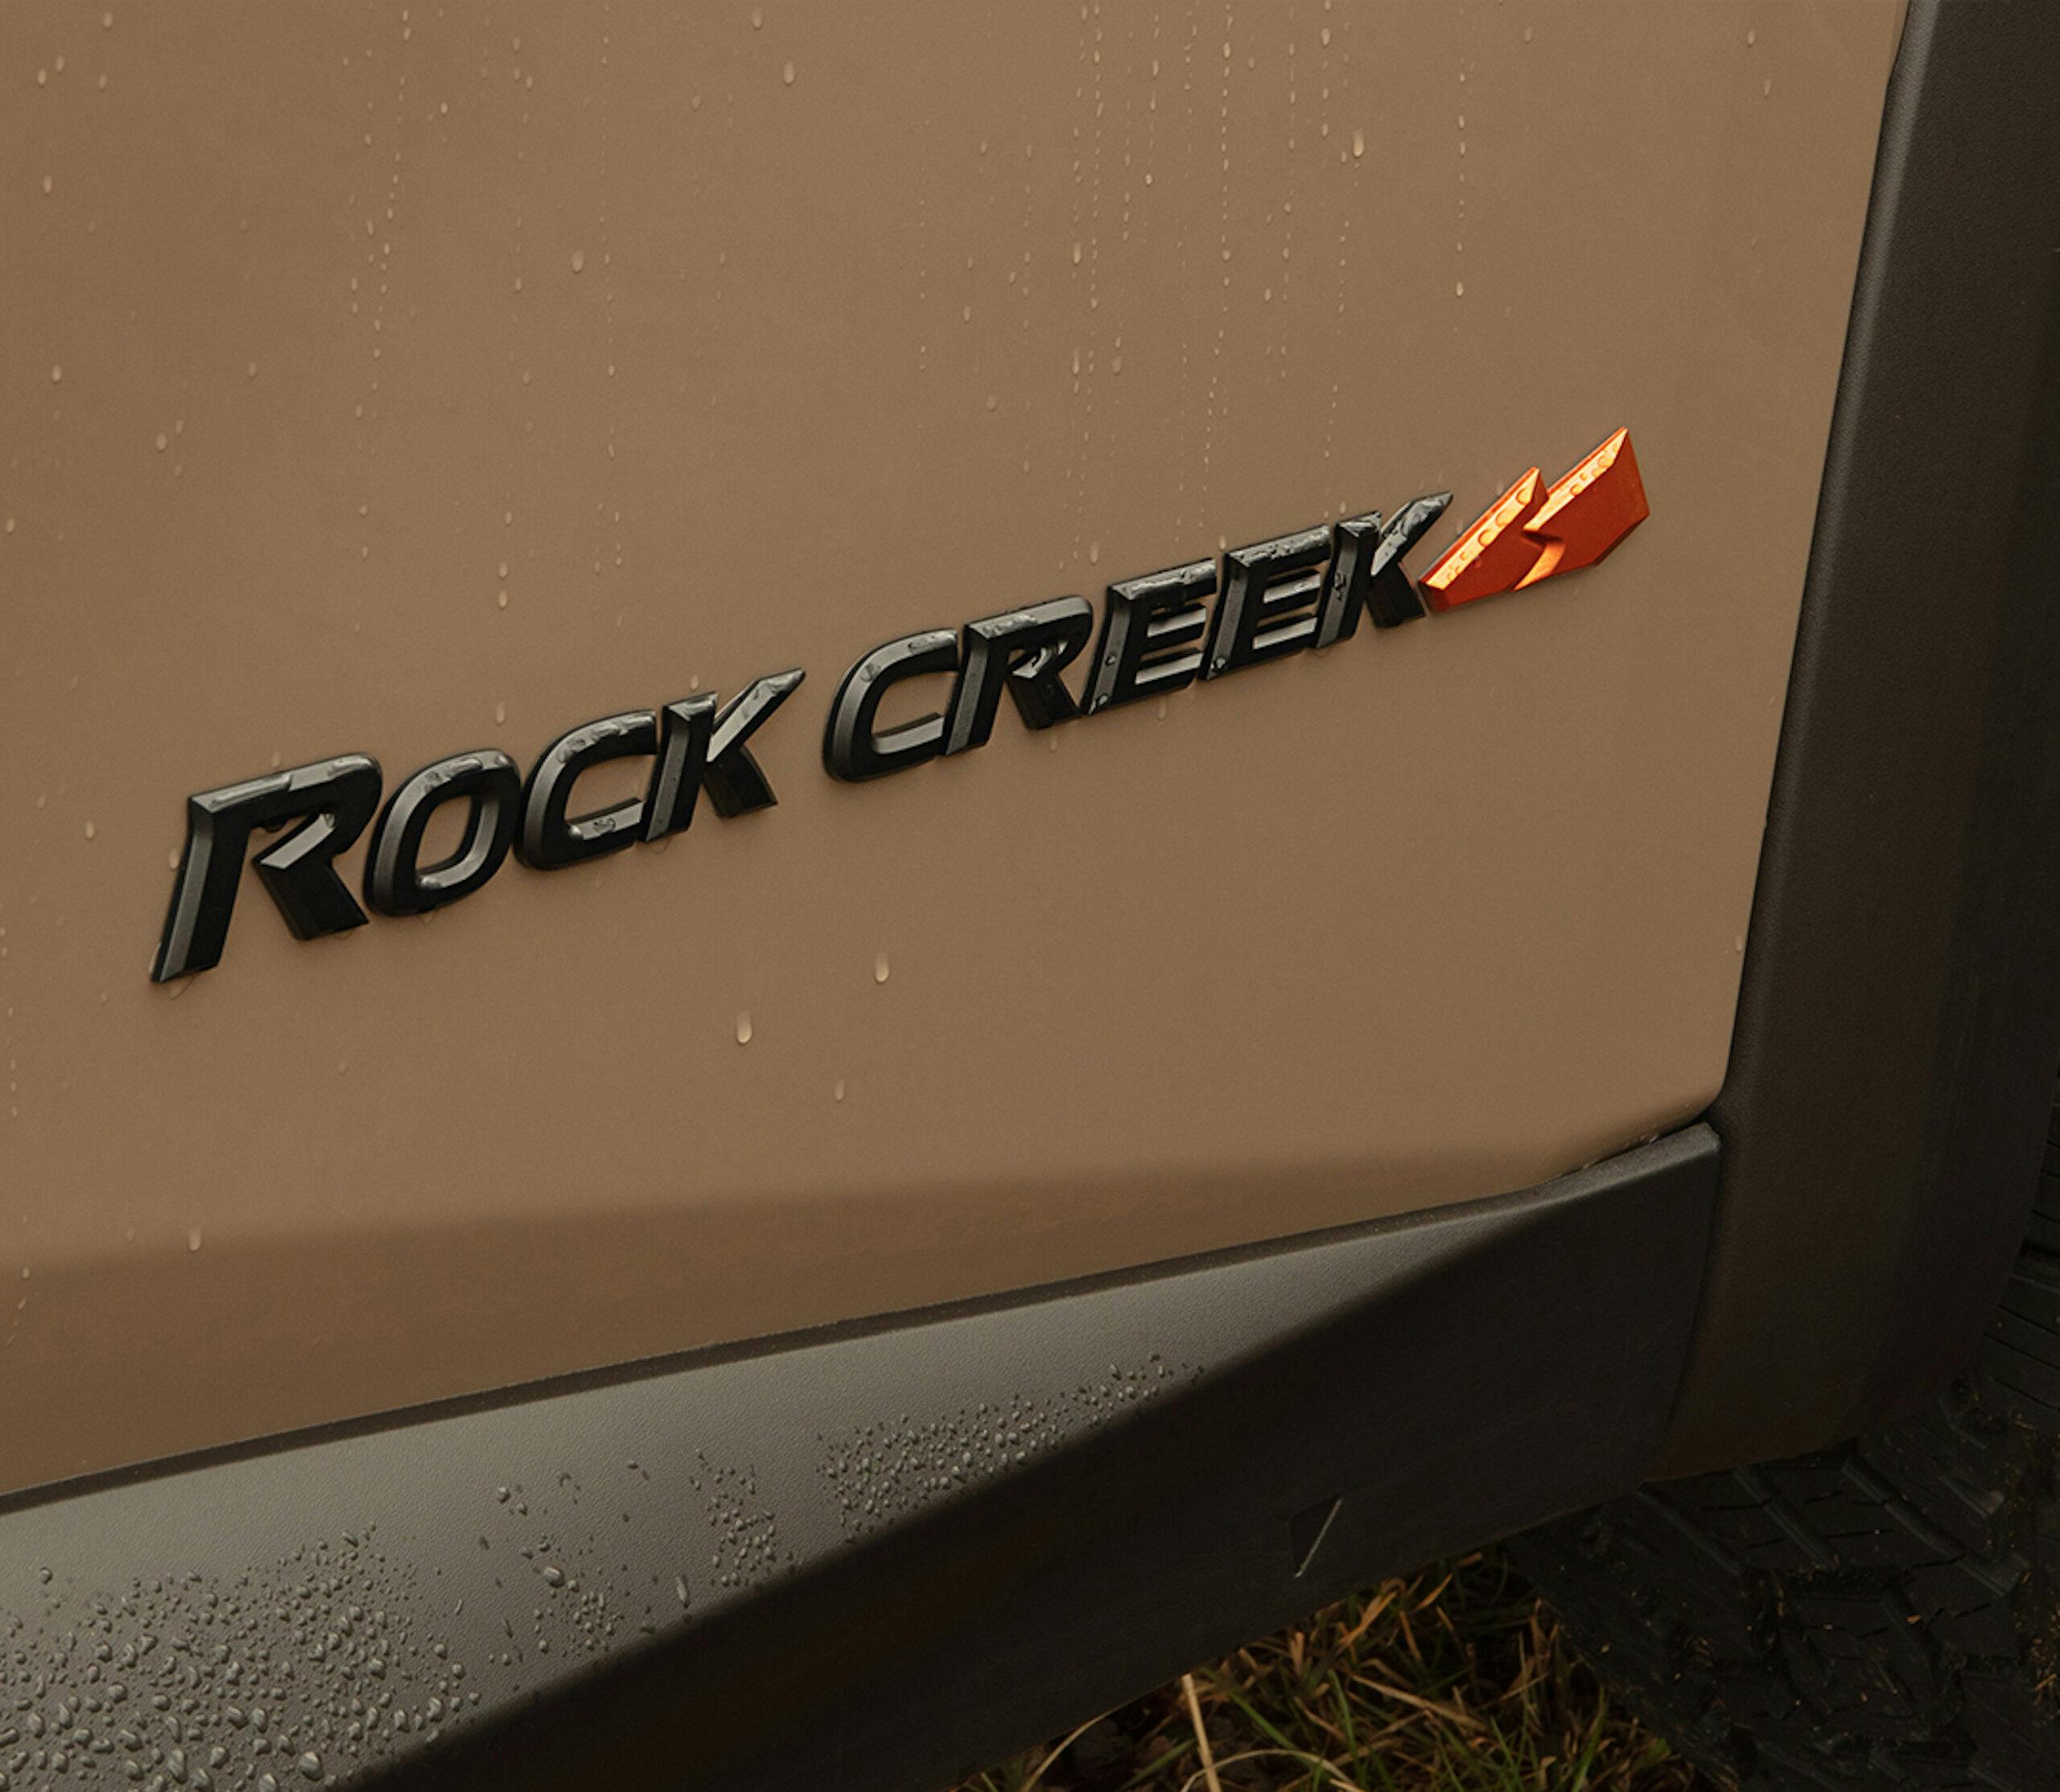 2023 Nissan Pathfinder Rock Creek Edition badge